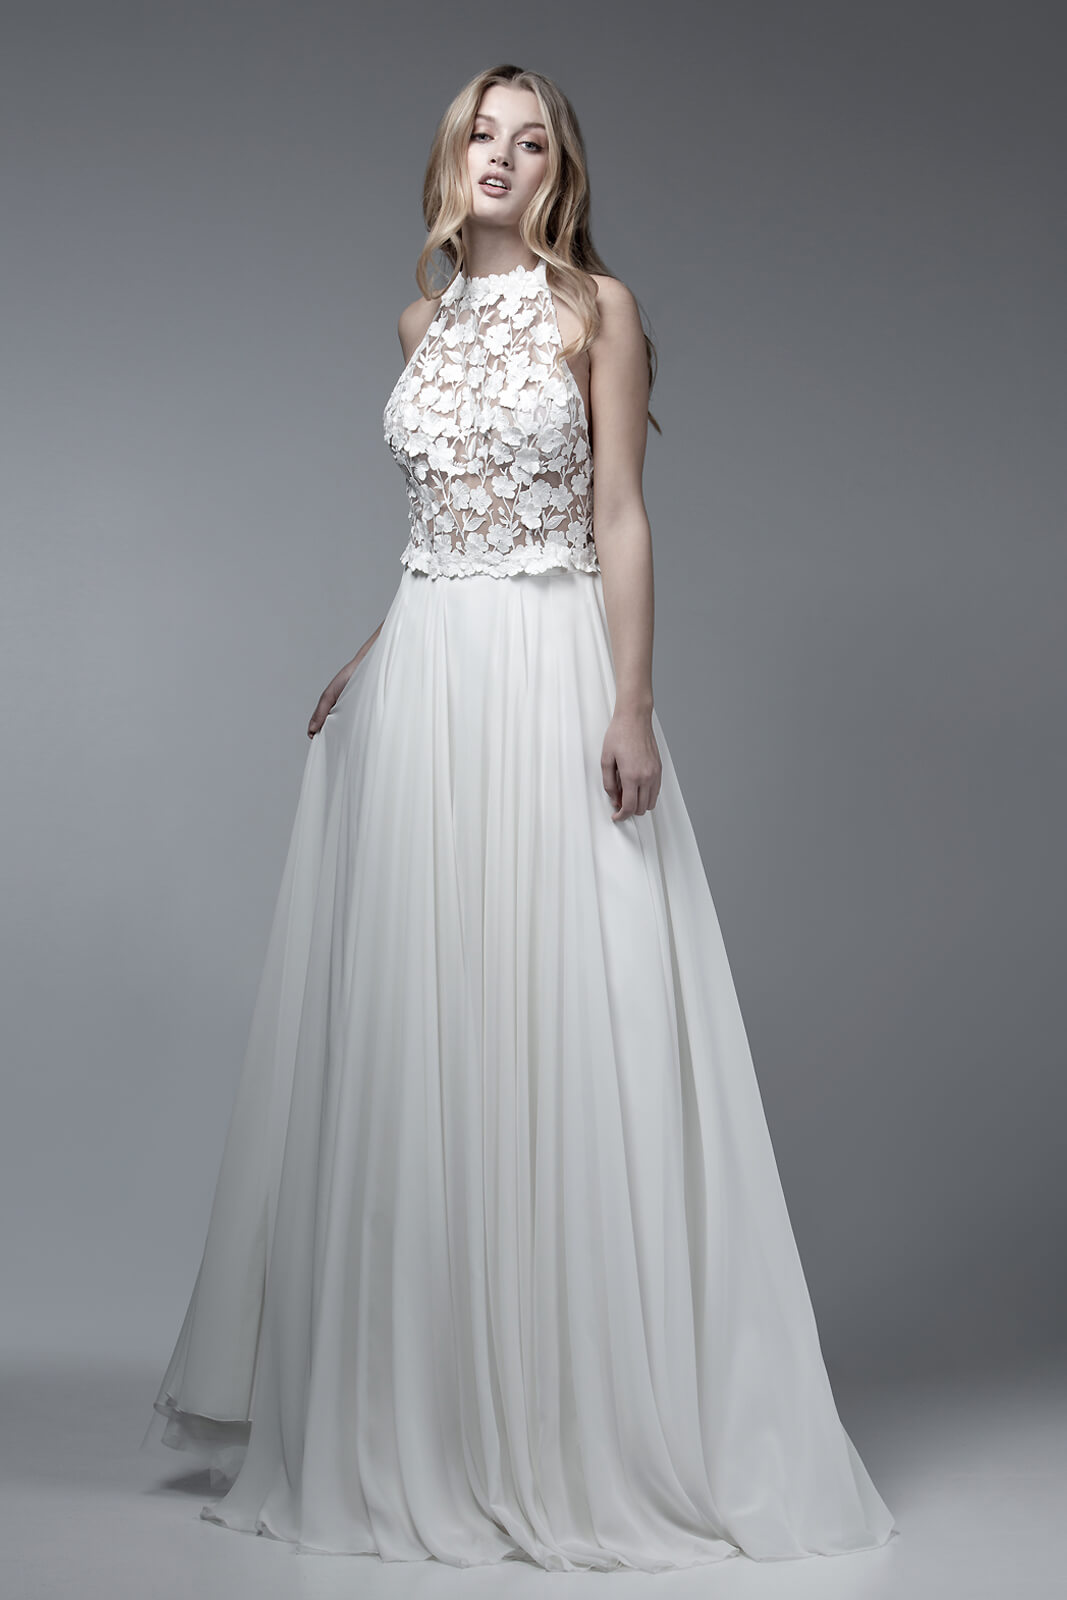 angelika dluzen couture stuen bridal skirt collection brude nederdele